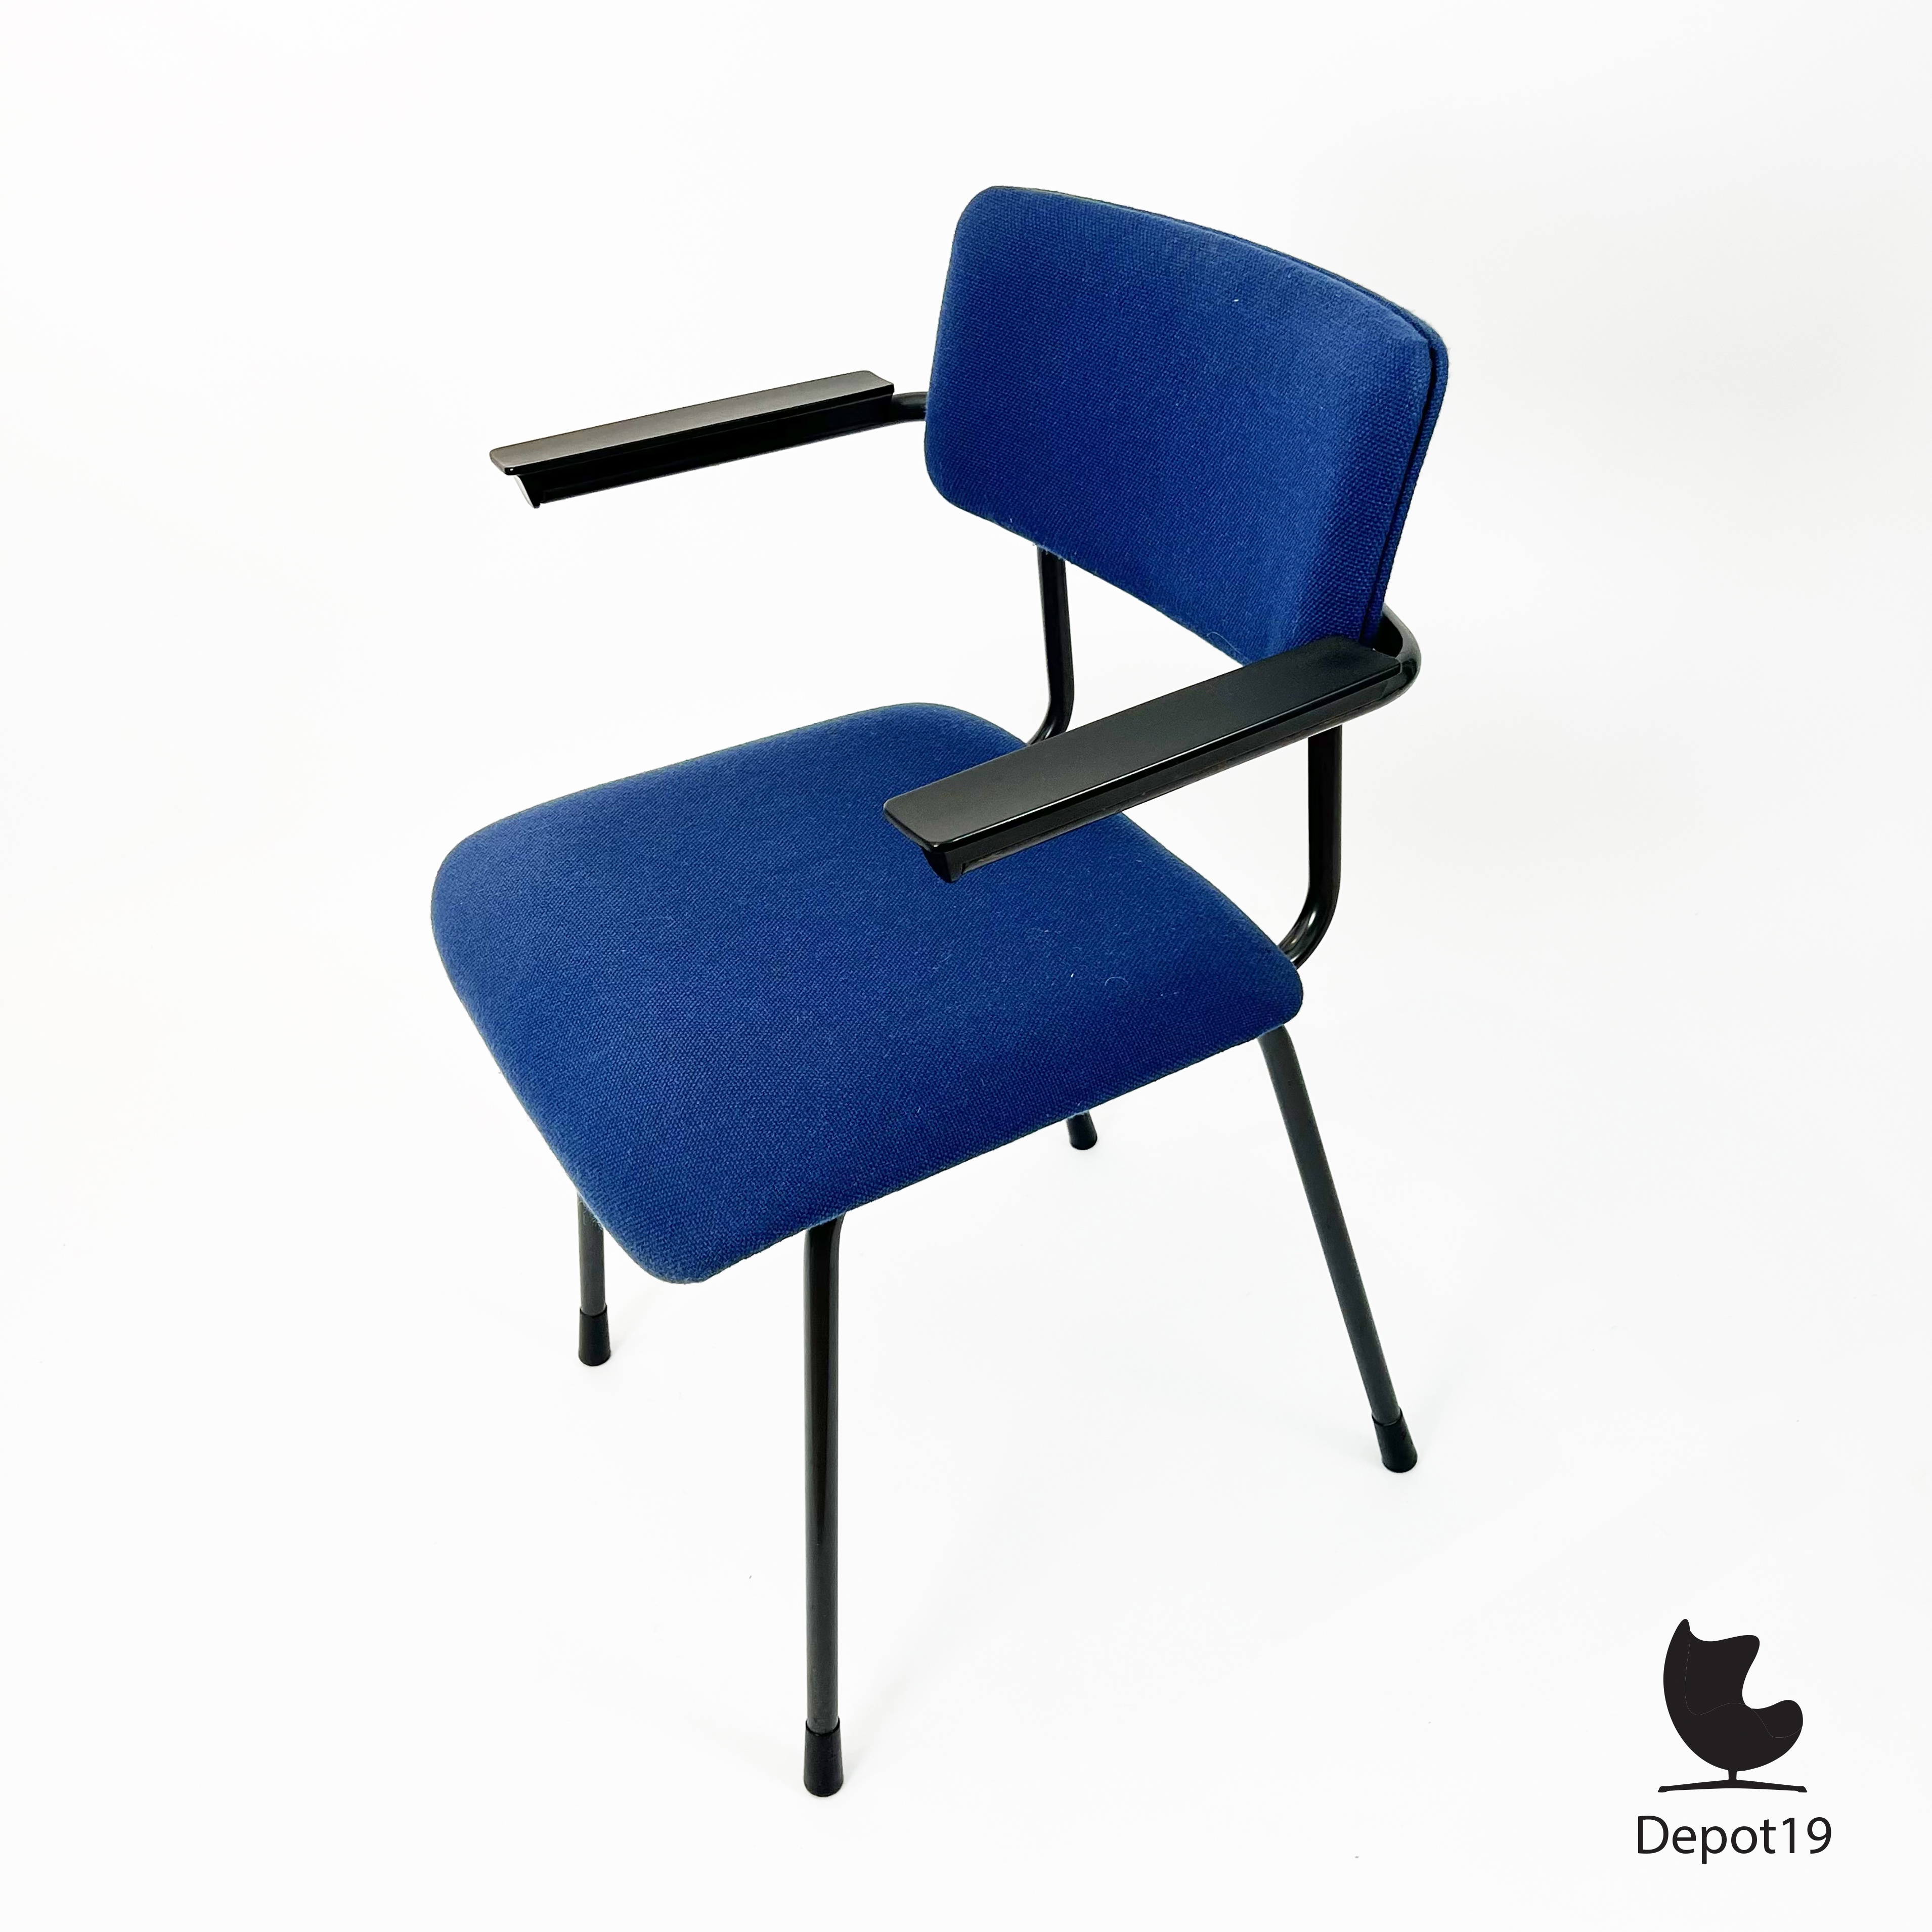 Gispen 1235 stoel ontwerp blauw | Depot